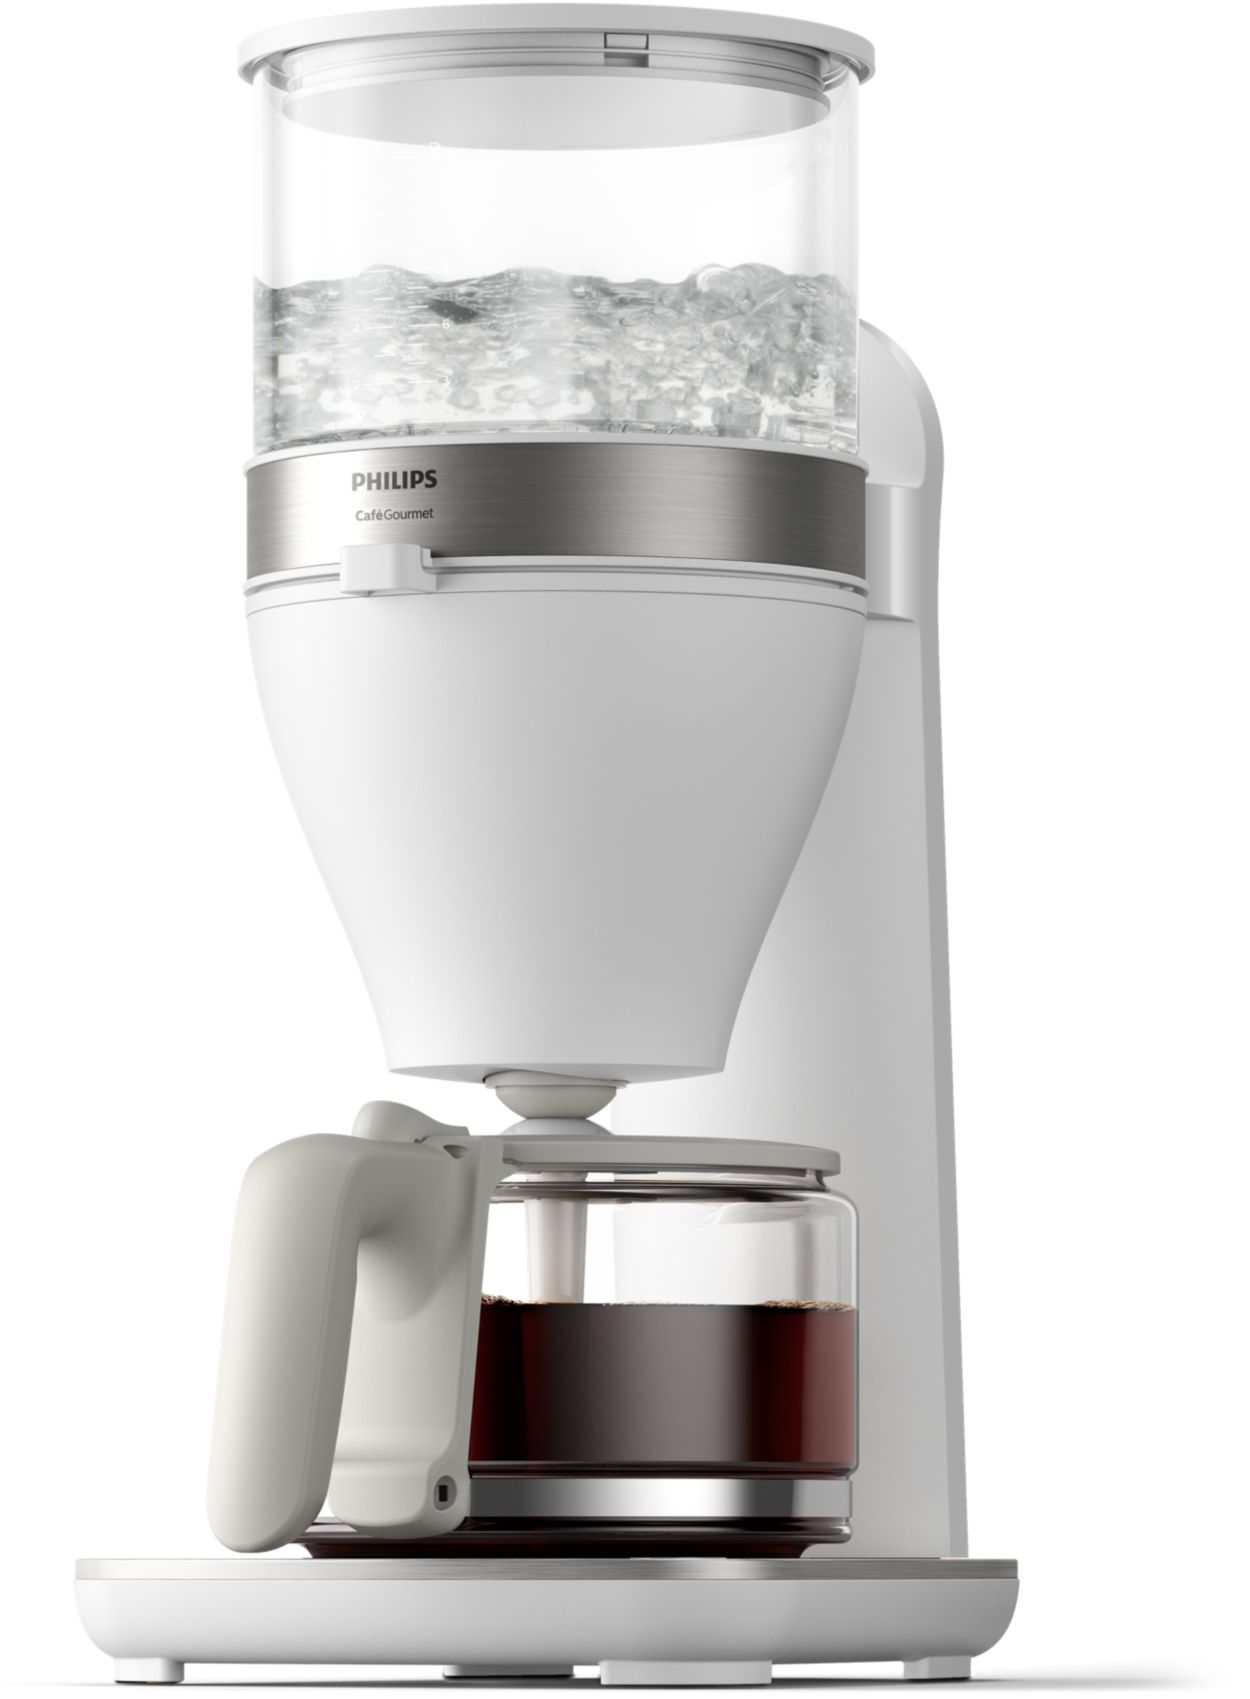 Cafe' Gourmet Drip Filter Coffee Machine HD5416/00 | Philips